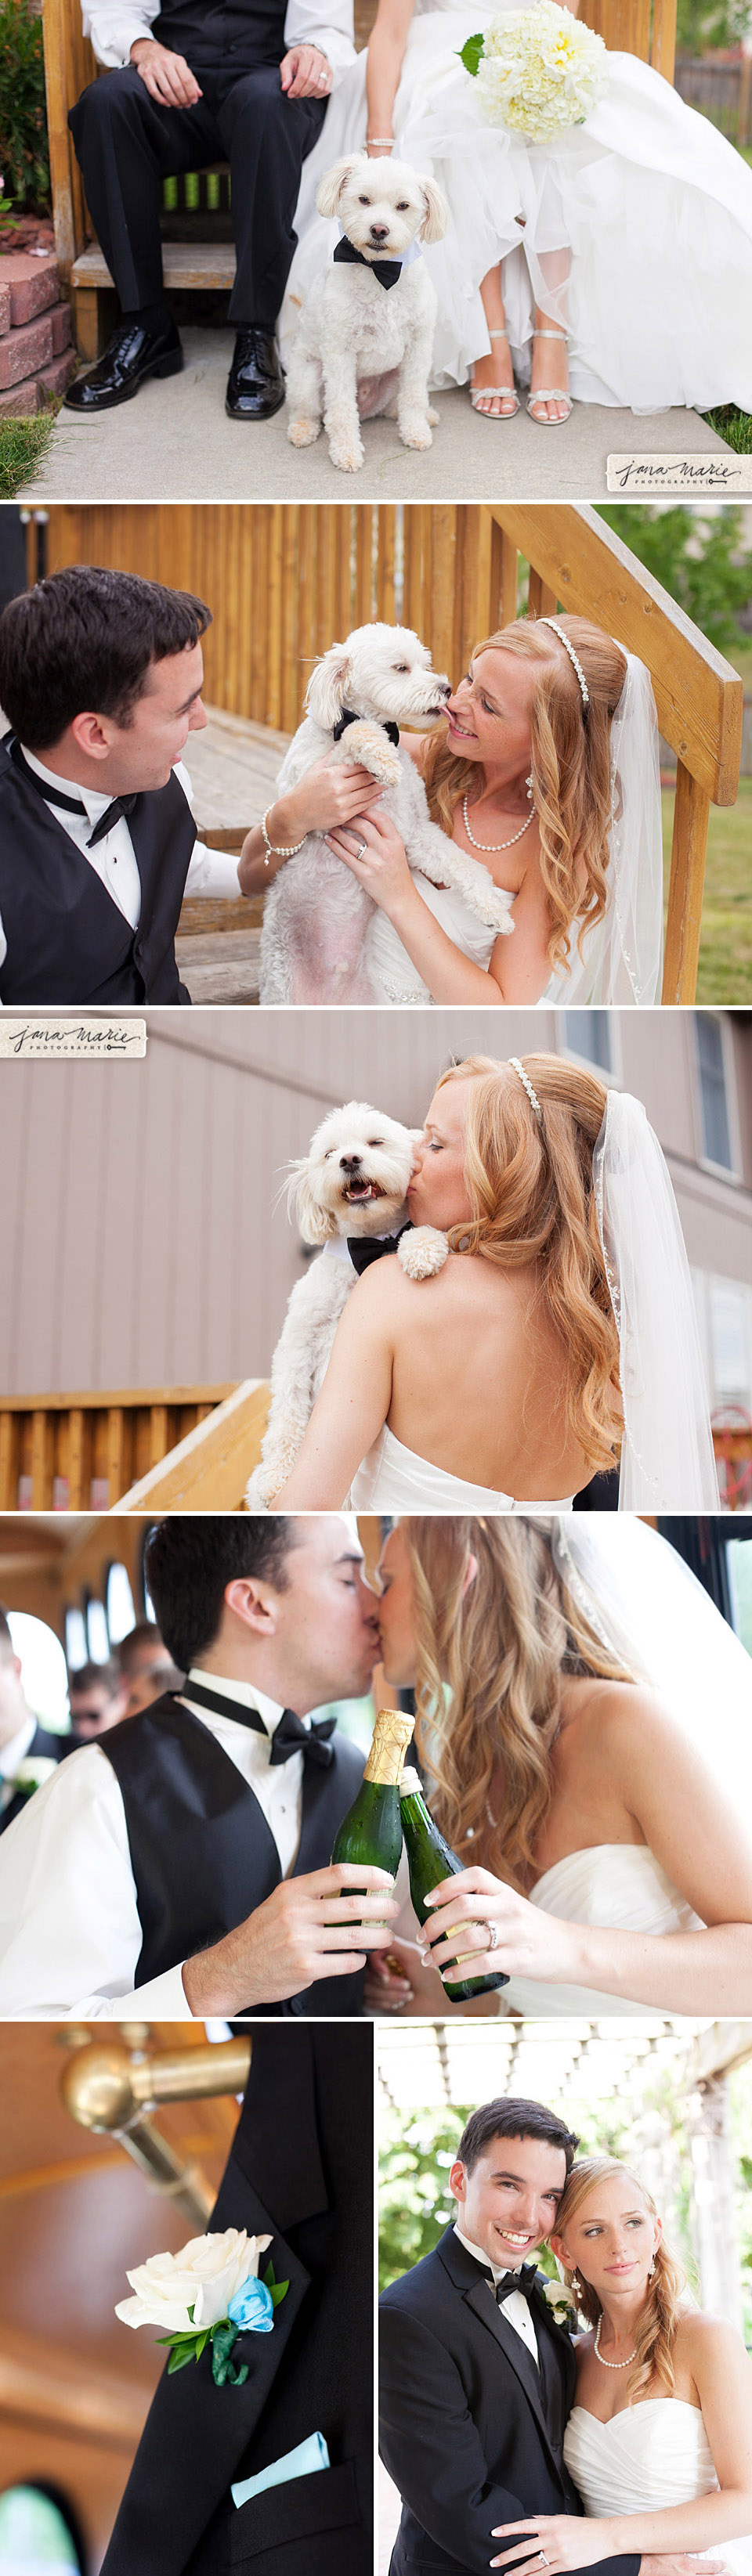 Puppy, Ring boy, Bow tie on dog, Bride and groom portraits, KC wedding photography, Jana Marler